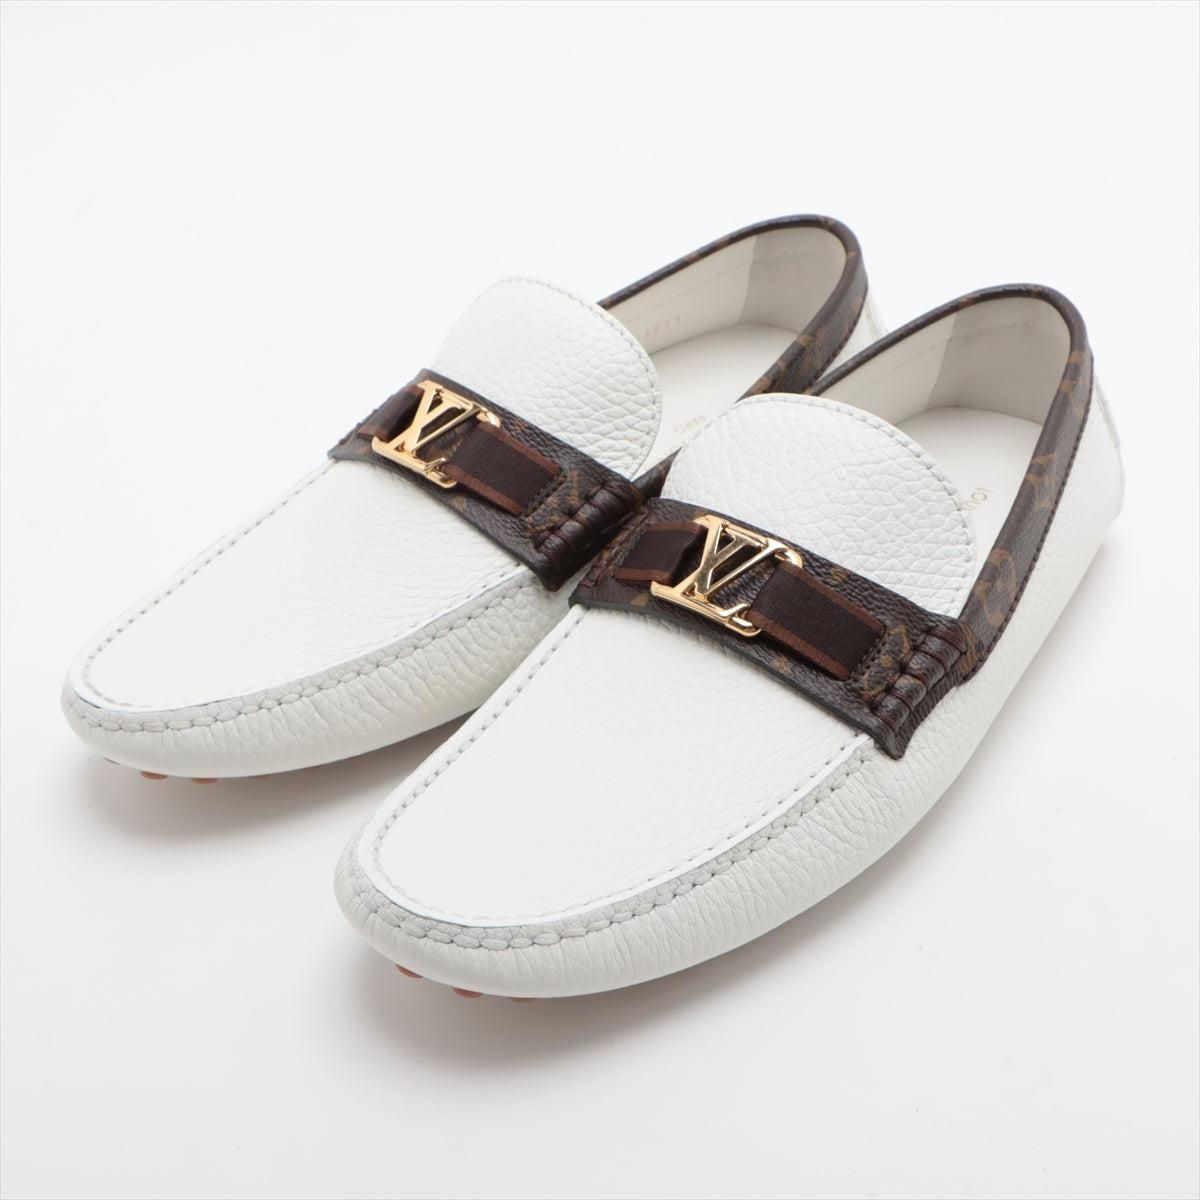 Louis Vuitton Hockenheim Line 21 years PVC & leather Driving shoes 7 1/2 Men's White x brown ND1211 Monogram LV Logo